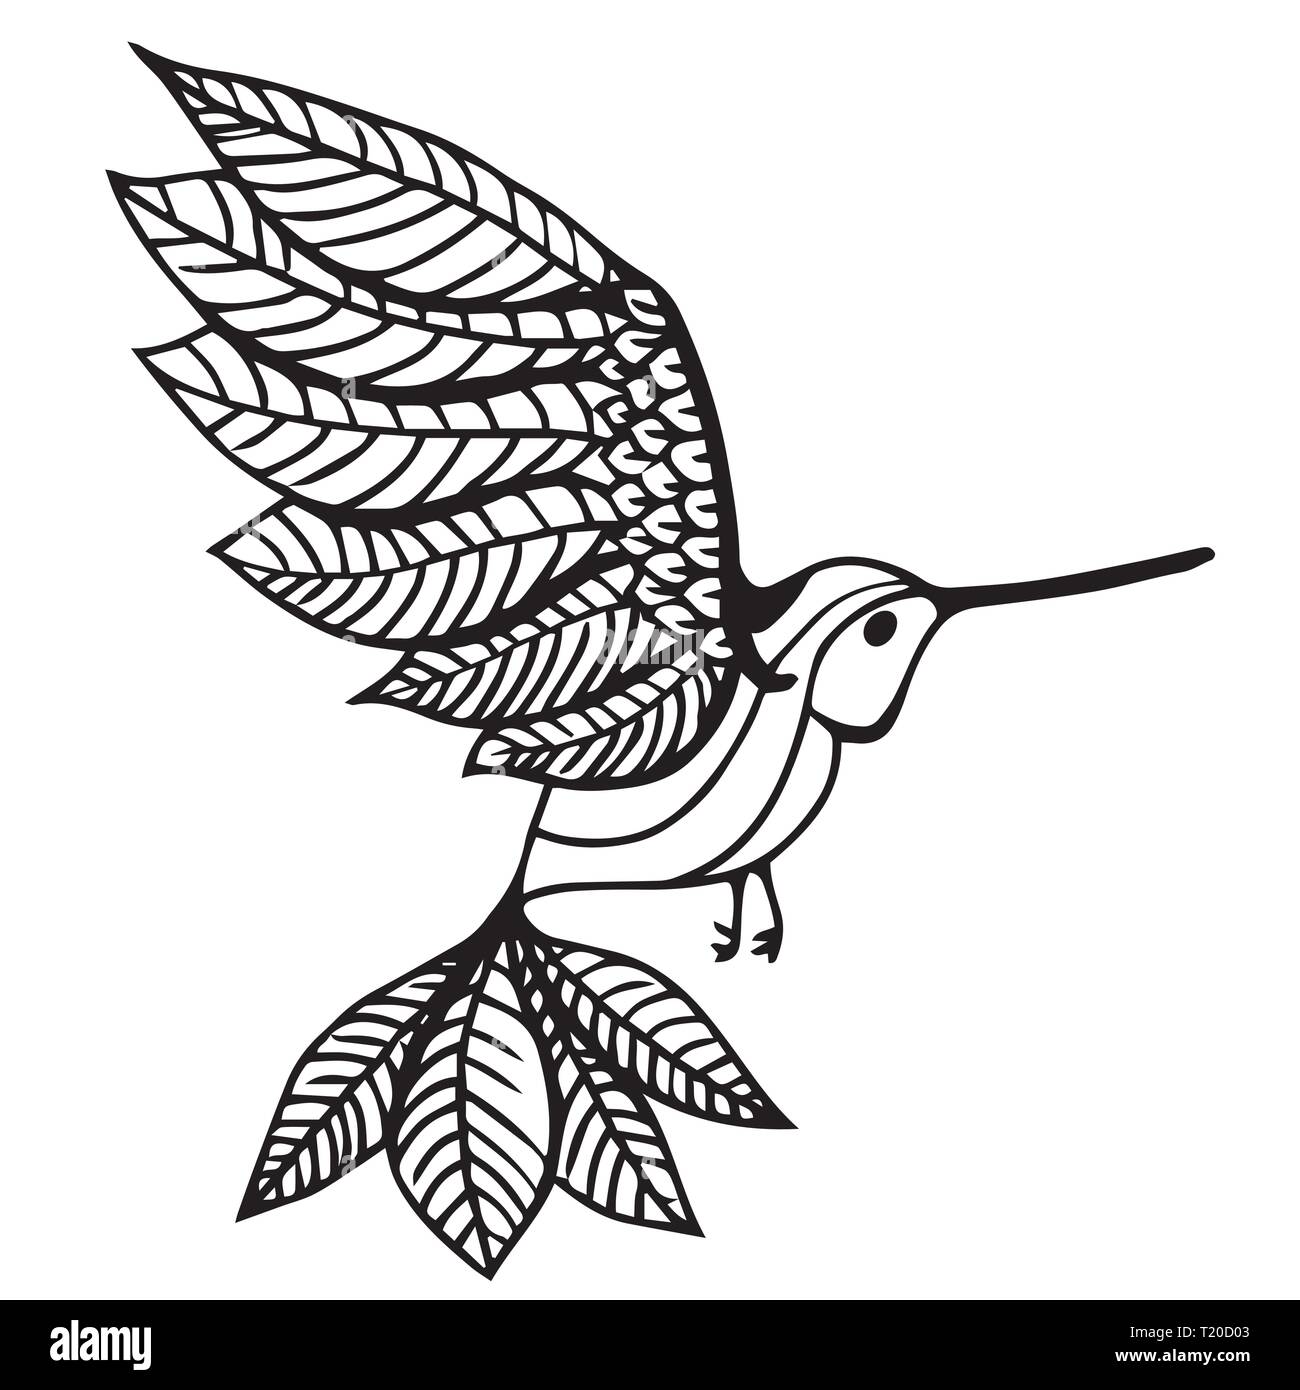 Hummingbird vector illustration isolated on white background Stock Vector